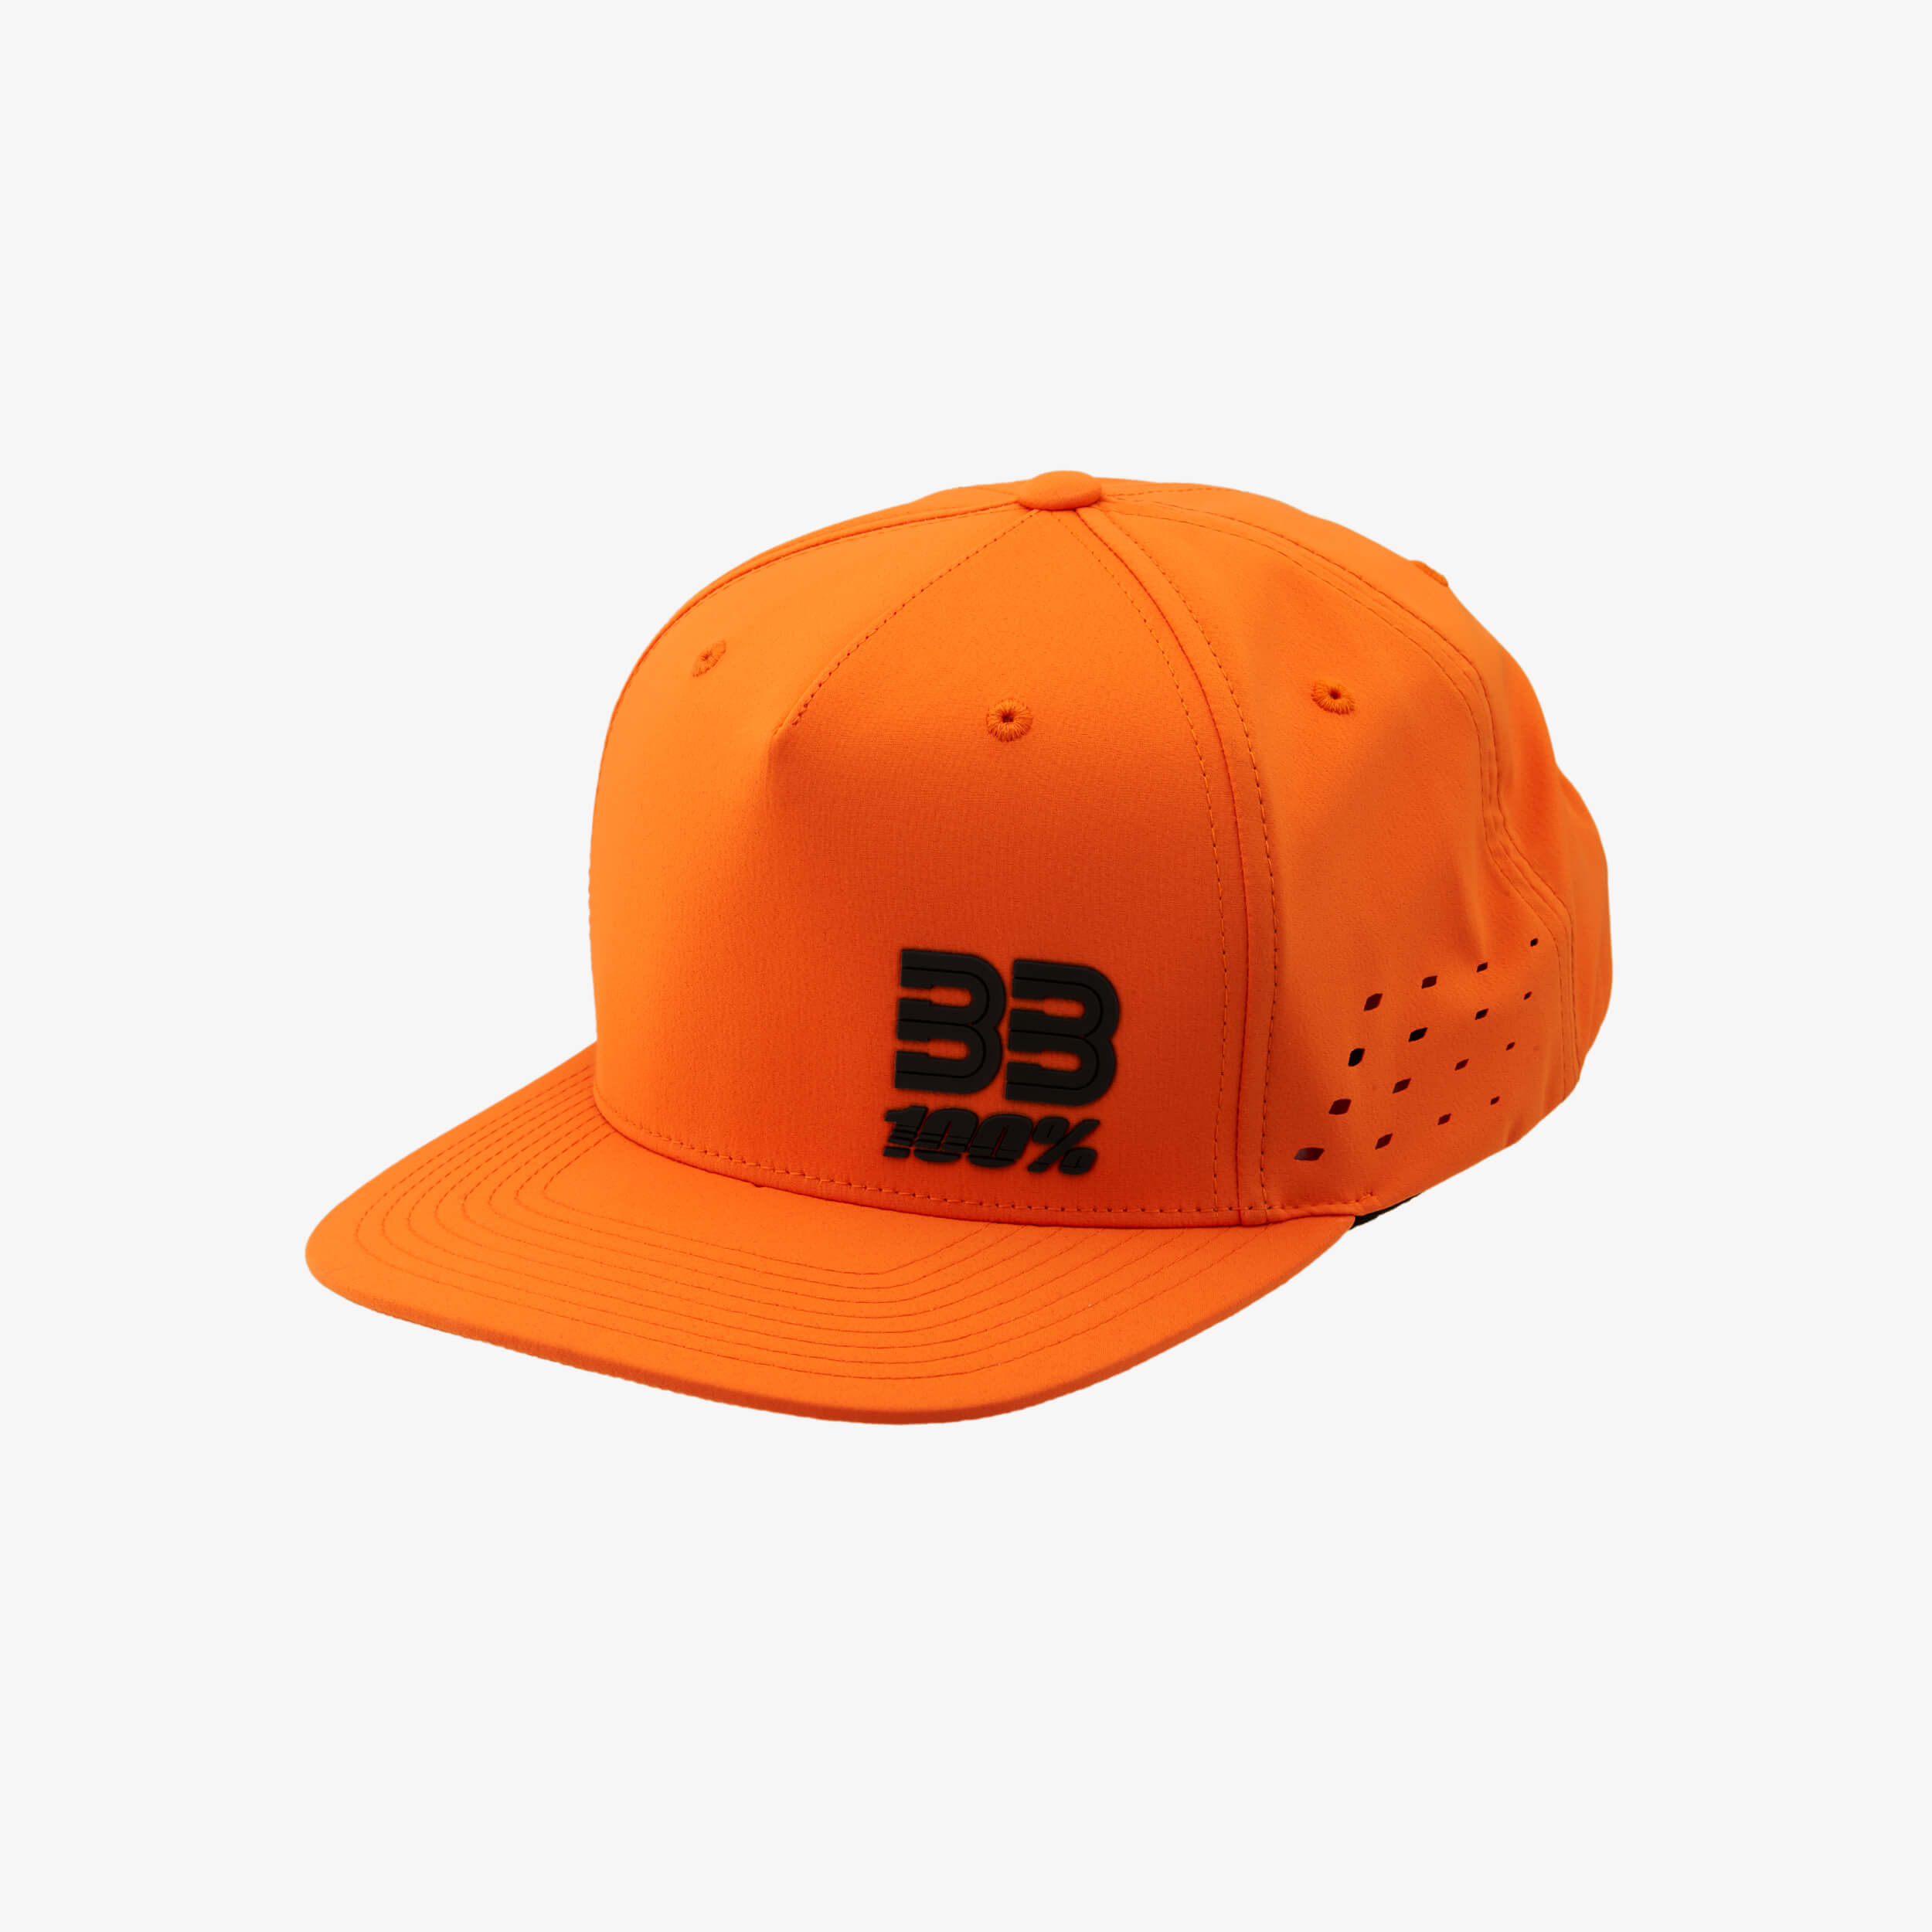 BB33 DRIVE Snapback Hat Orange